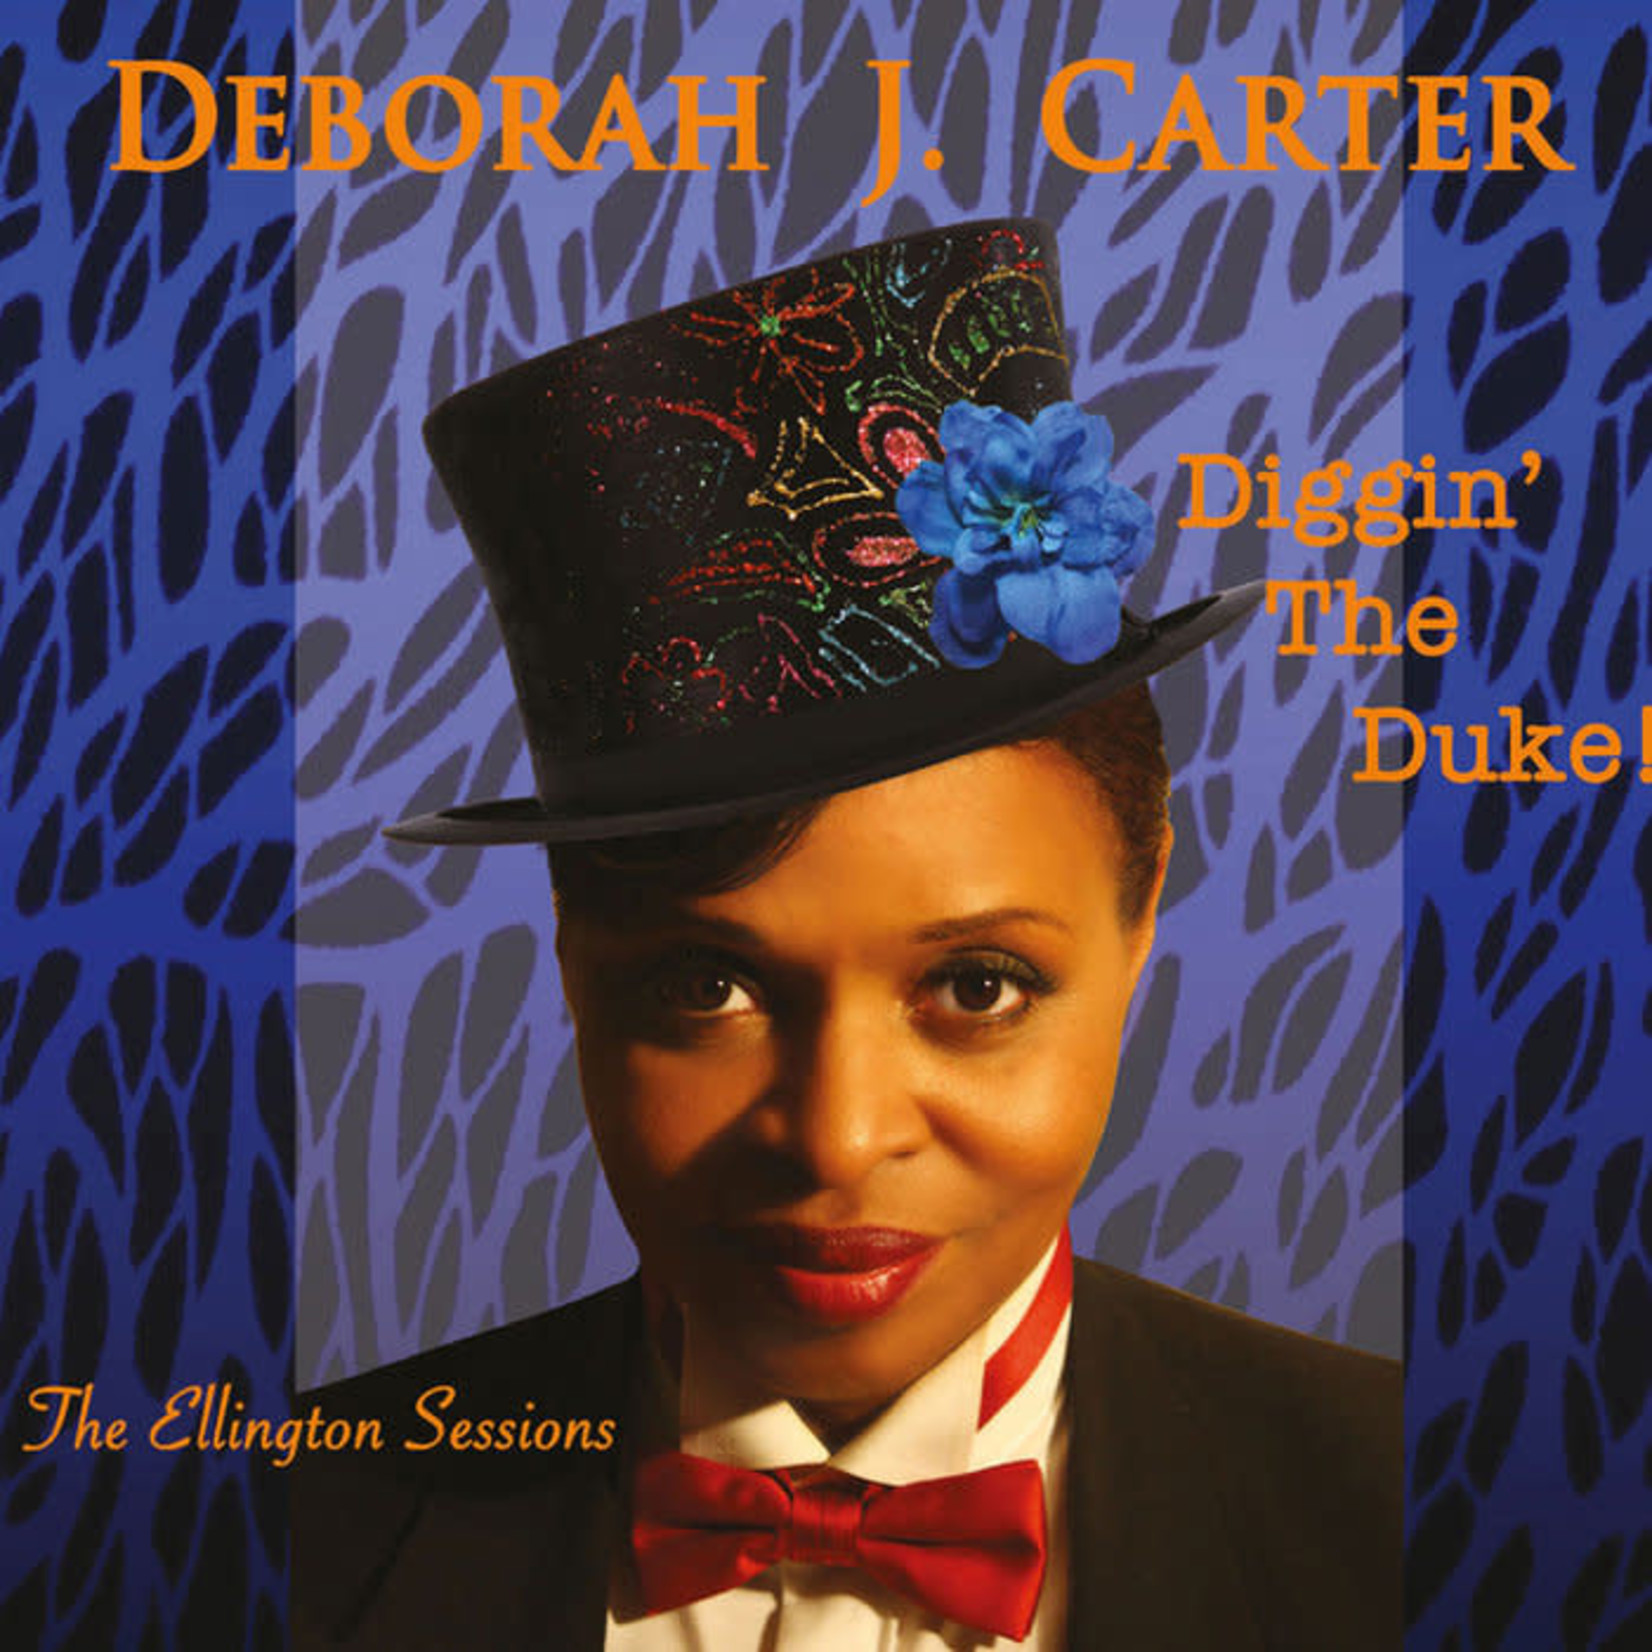 Deborah Carter - Diggin the Duke, The Ellington Sessions